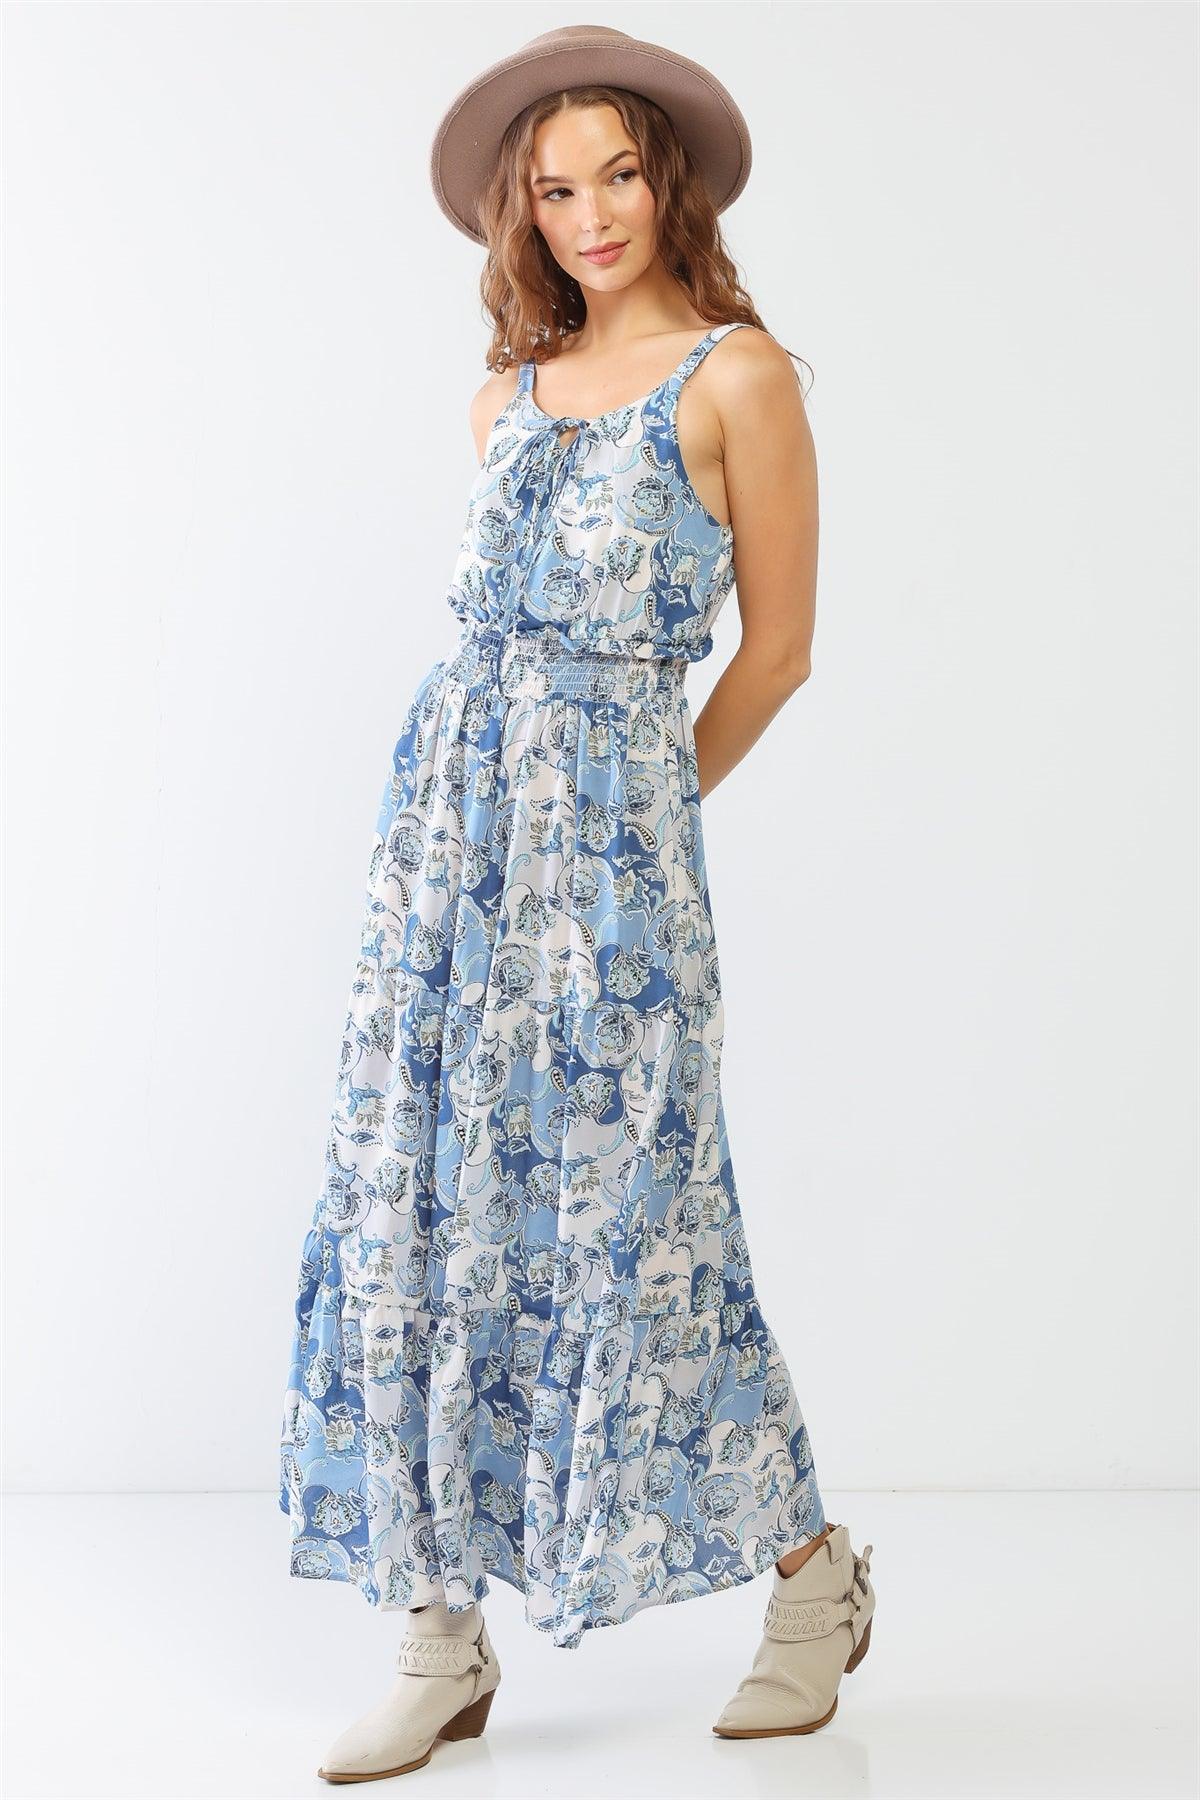 Blue Paisley Print Sleeveless Strappy Self-Tie Neck Smocked Flare Hem Maxi Dress /2-2-2